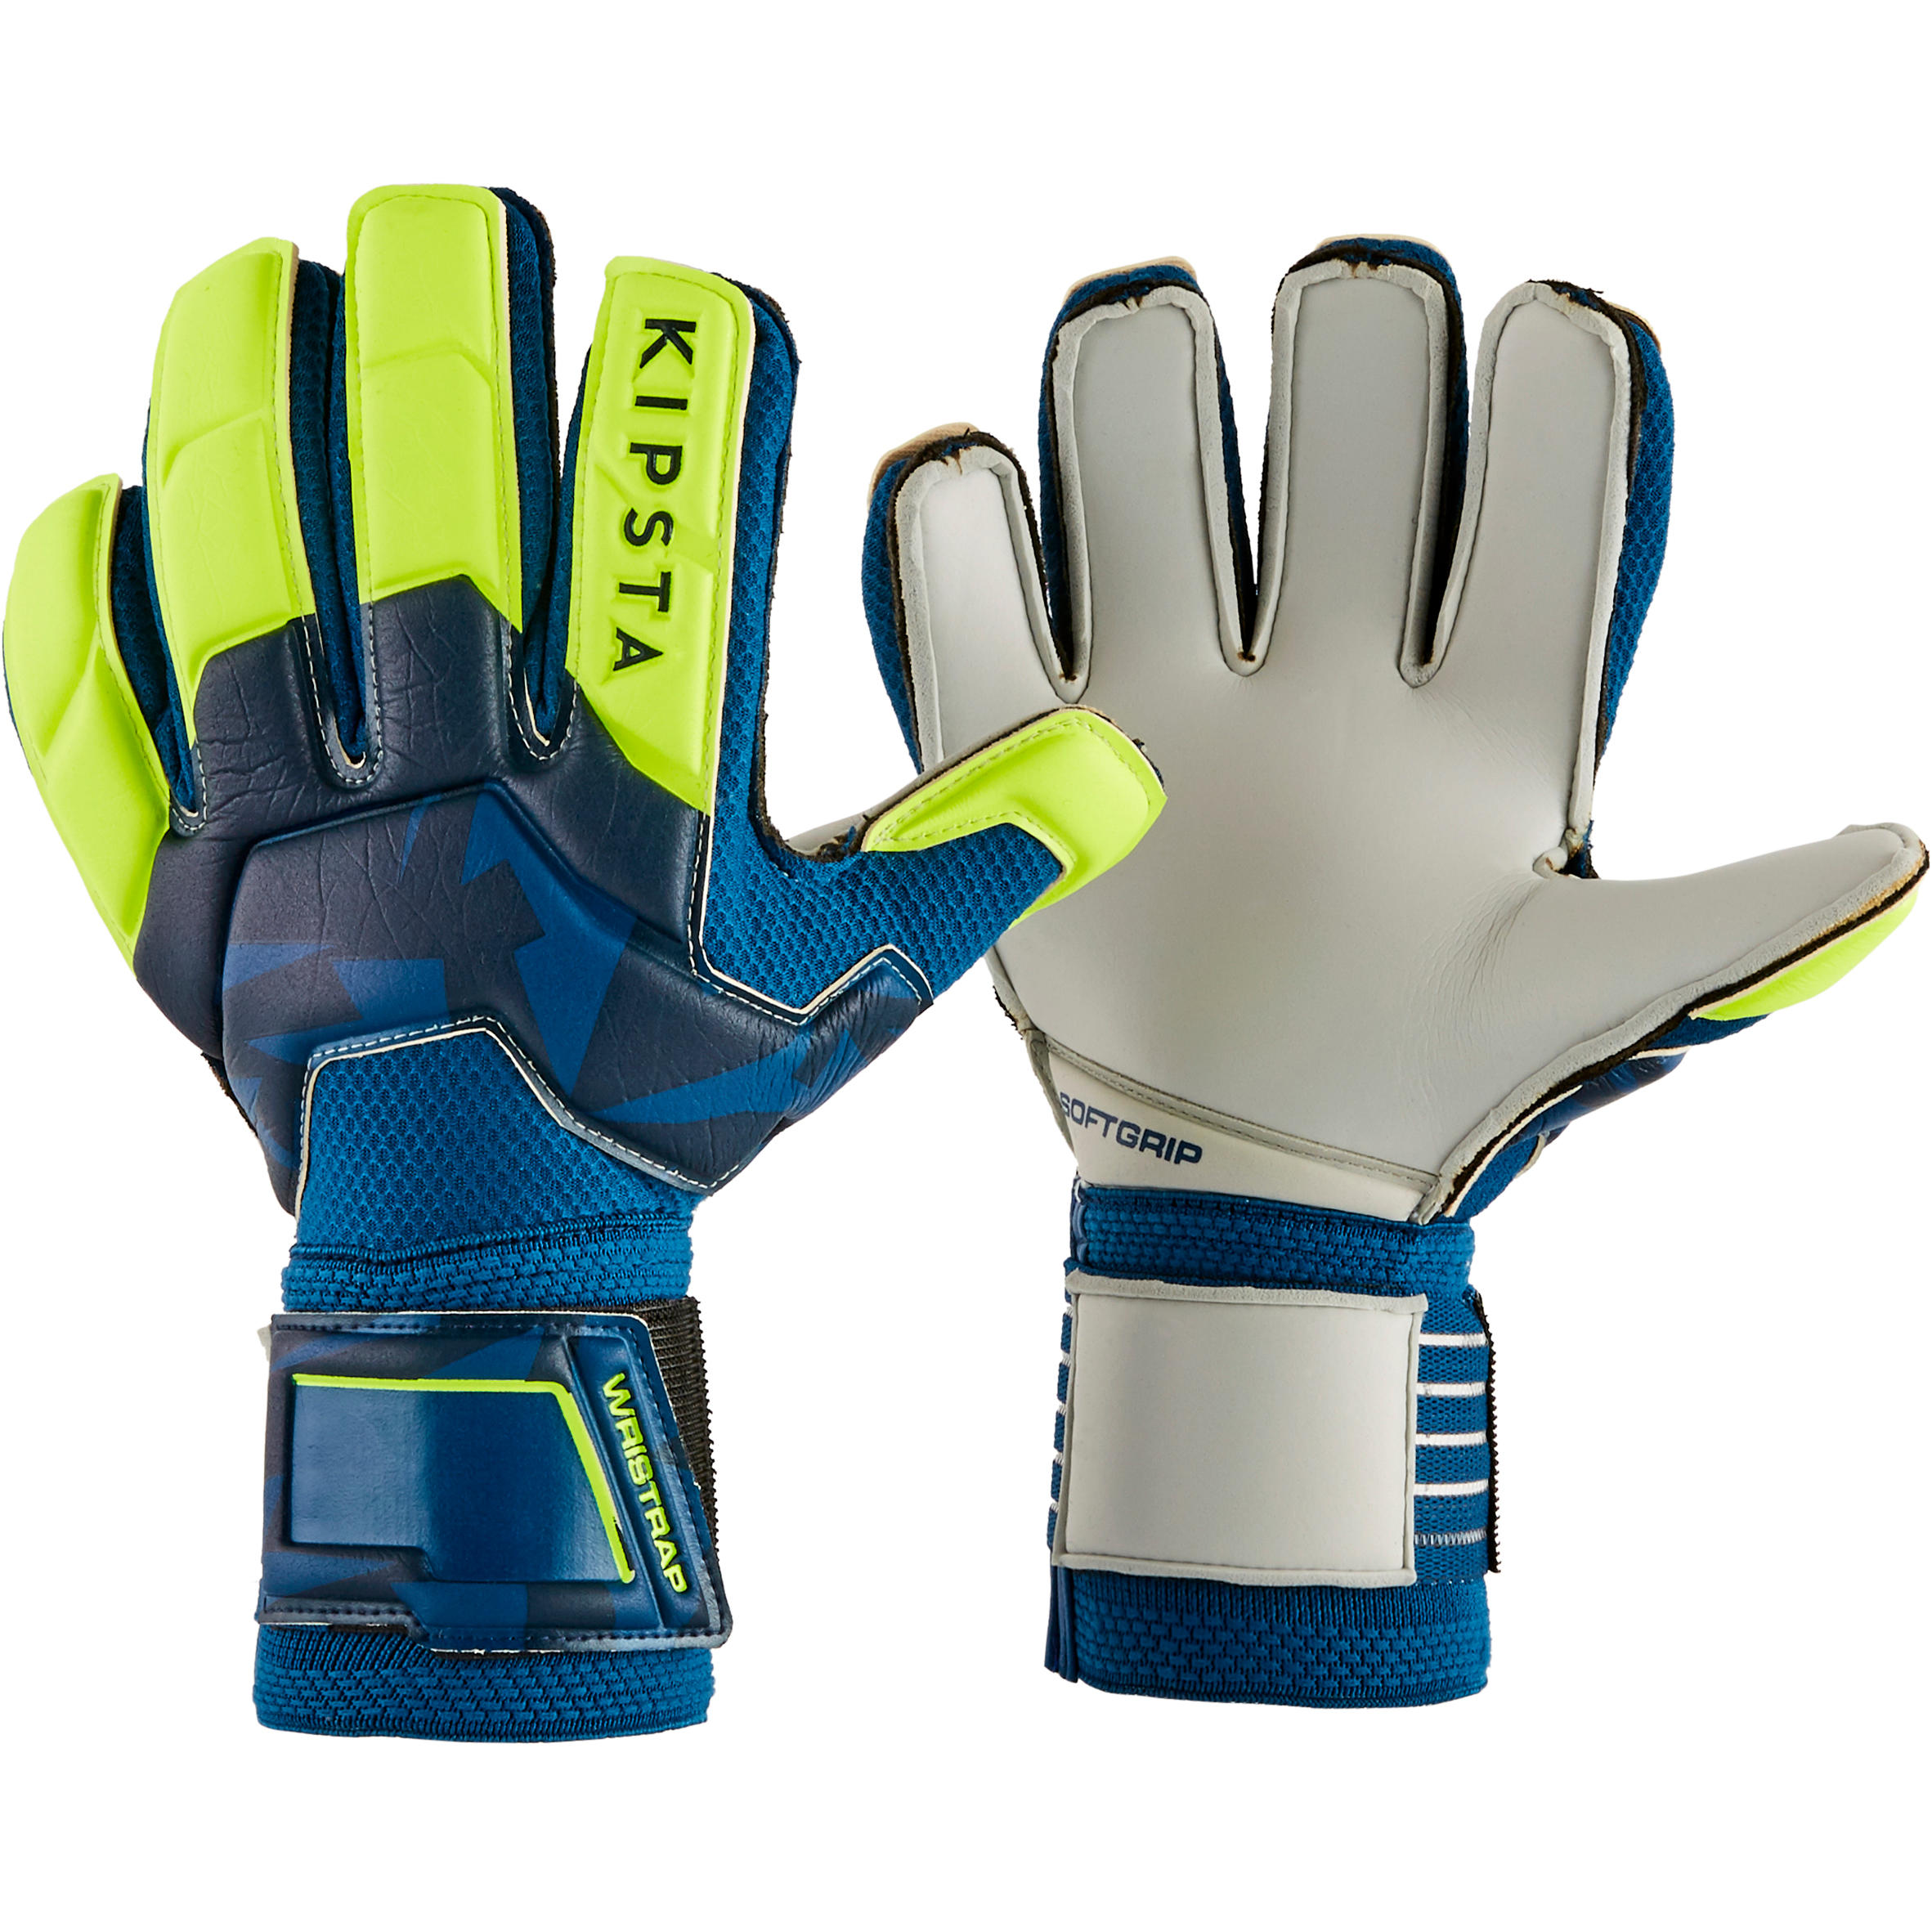 KIPSTA F500 Kids' Football Goalkeeper Gloves - Blue/Yellow